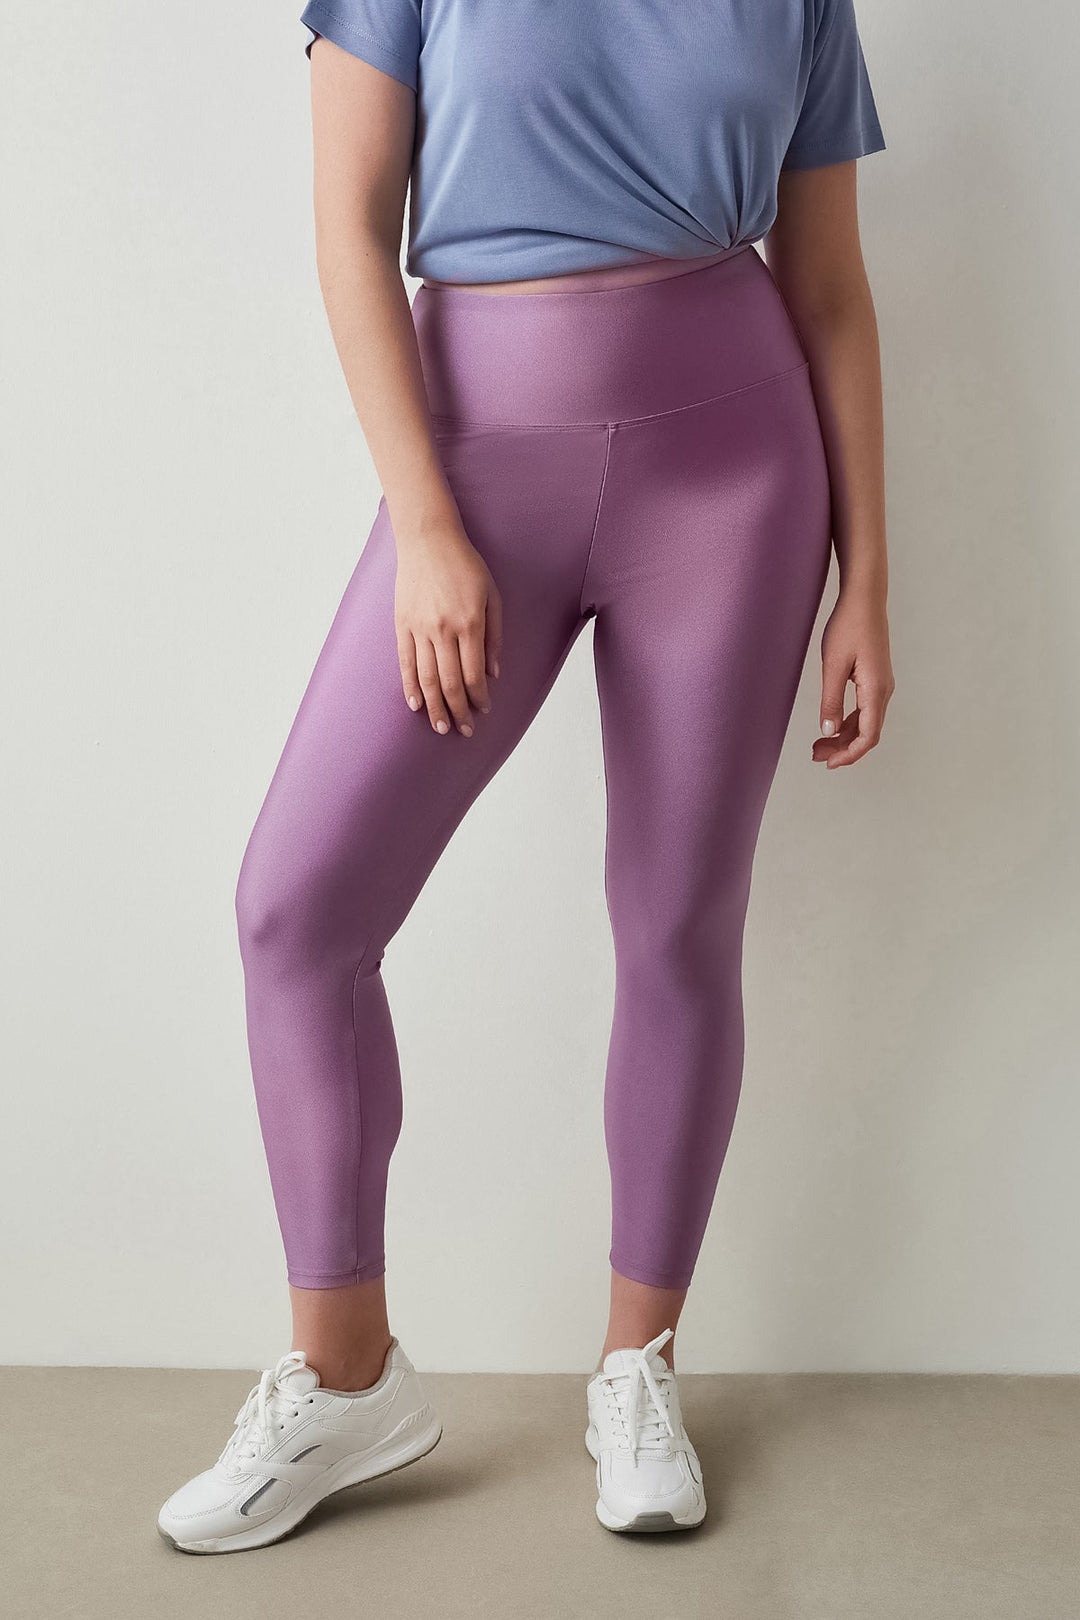 C9 Champion Girls' Leggings, Dark Berry Purple, XL price in Saudi Arabia,  Saudi Arabia